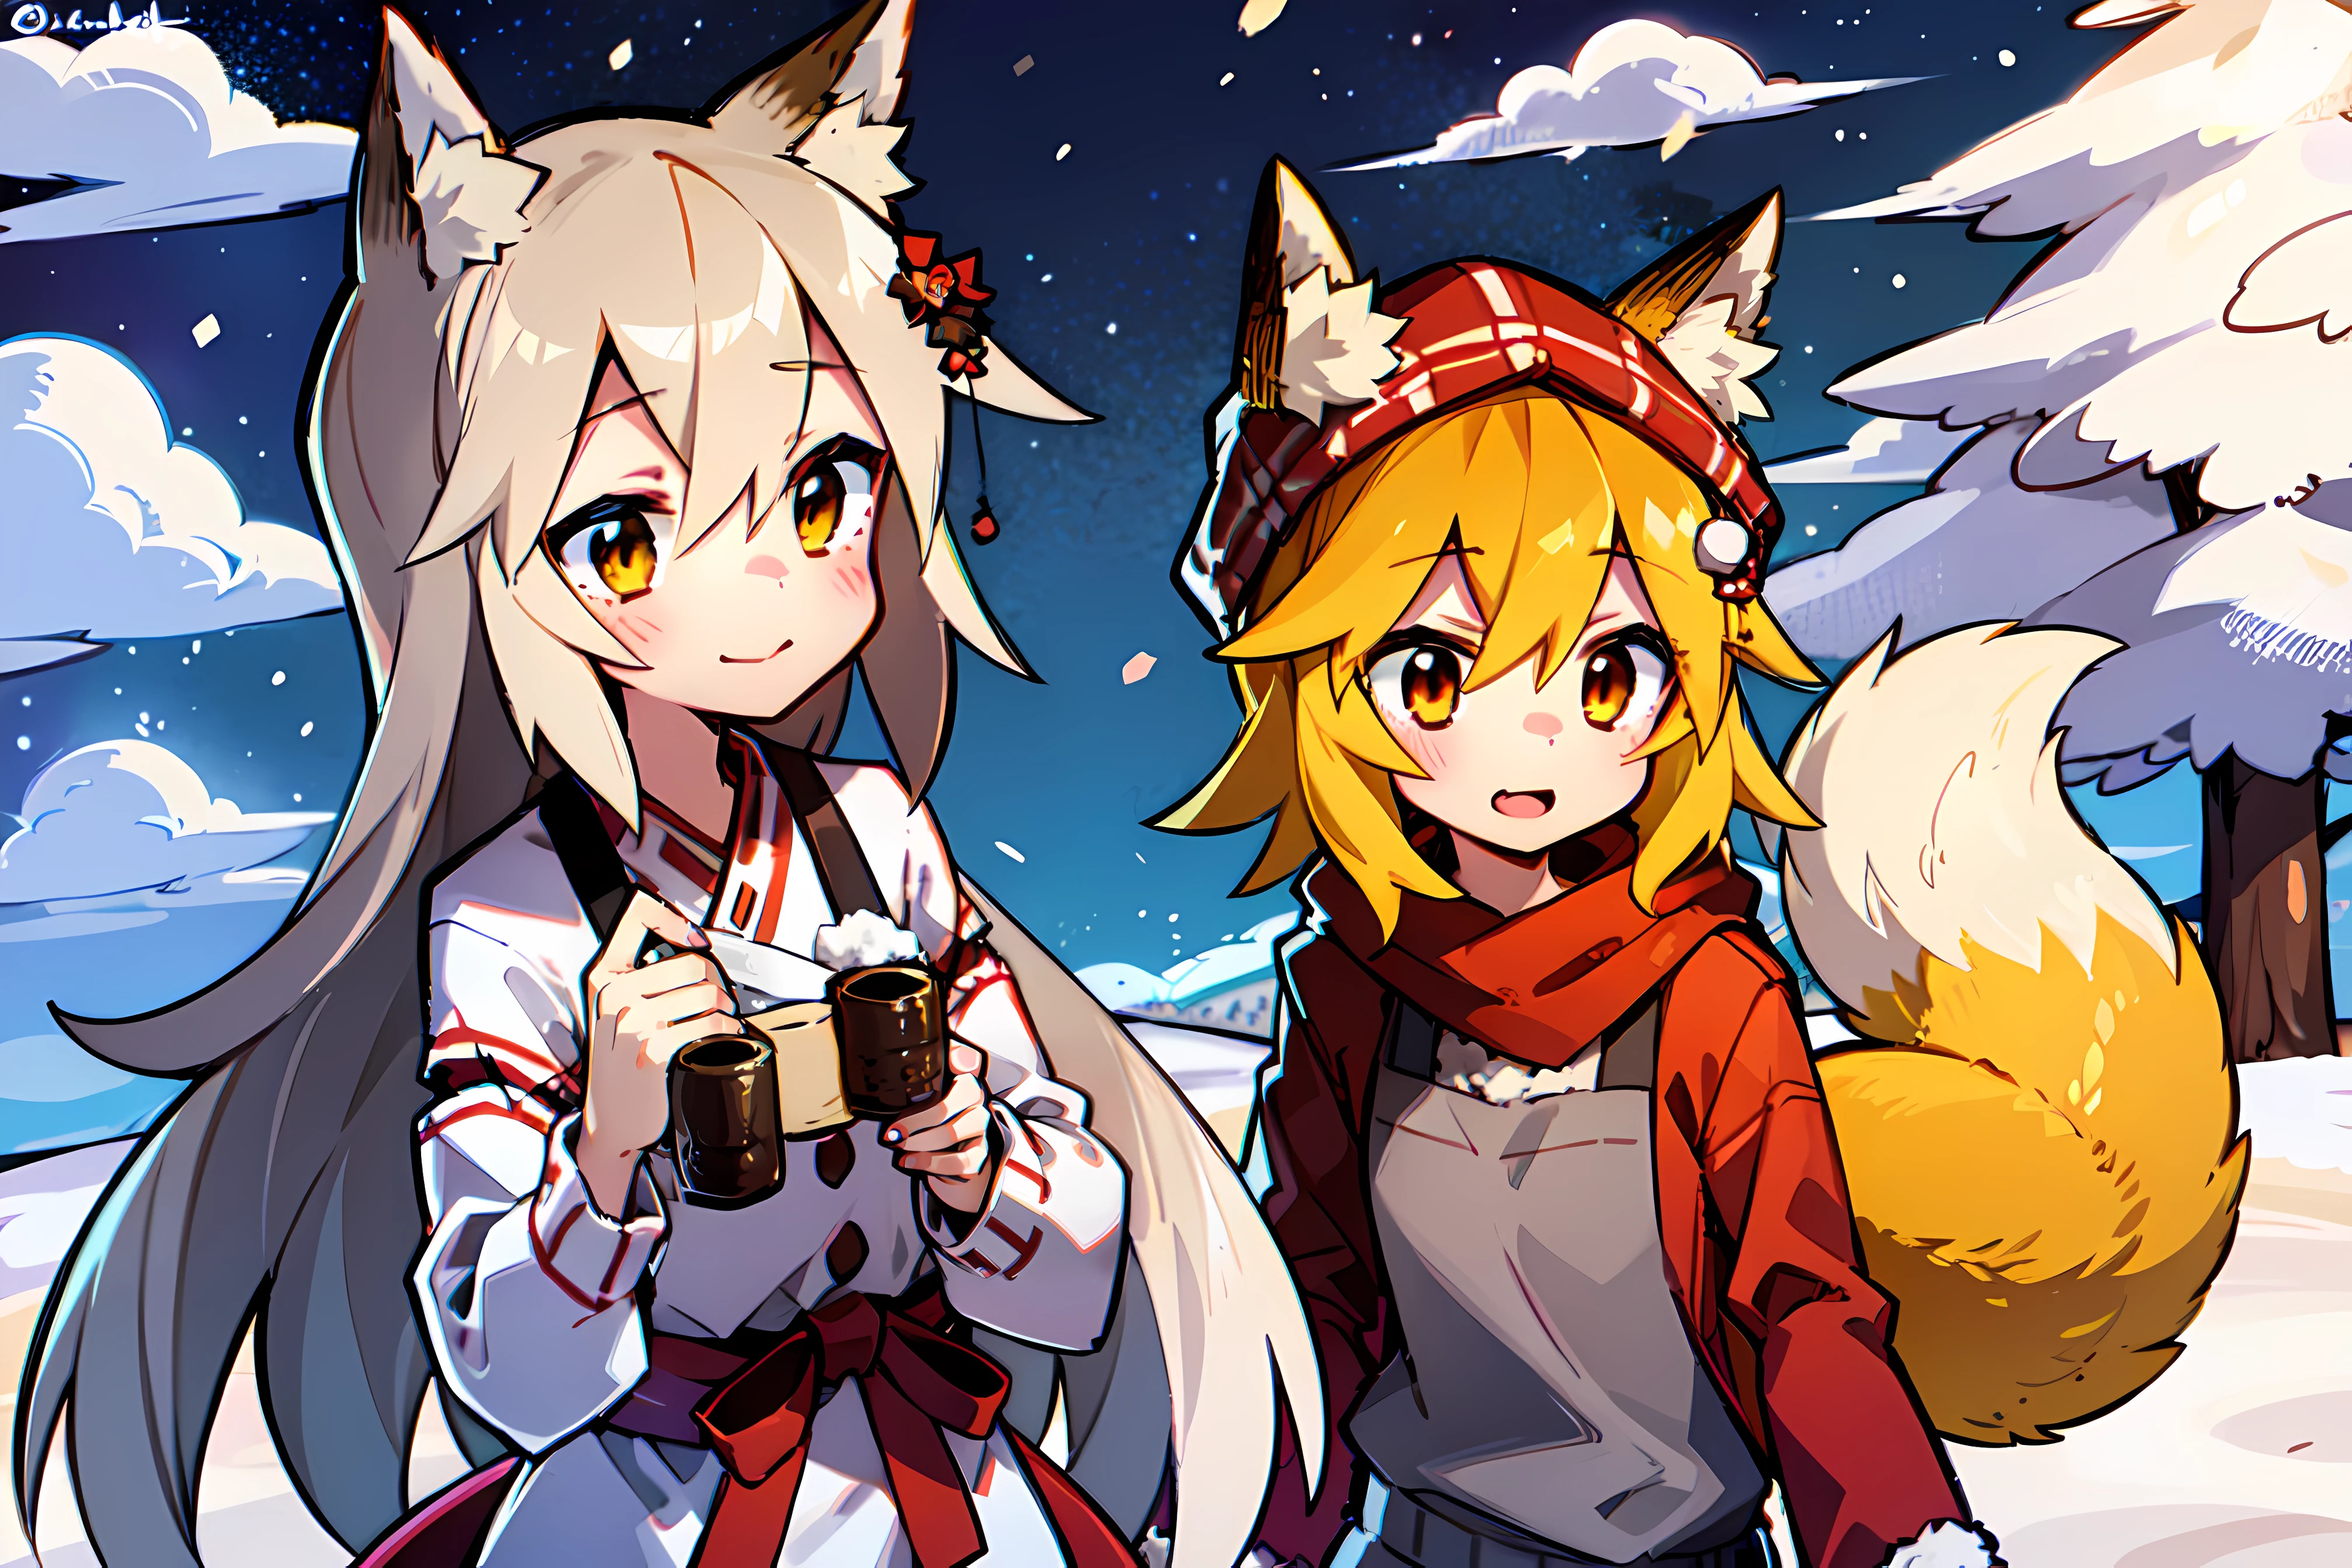 Yandex 陈, 一个女孩, 狐狸耳朵, 圣诞树, 冬天, 冬天 clothes